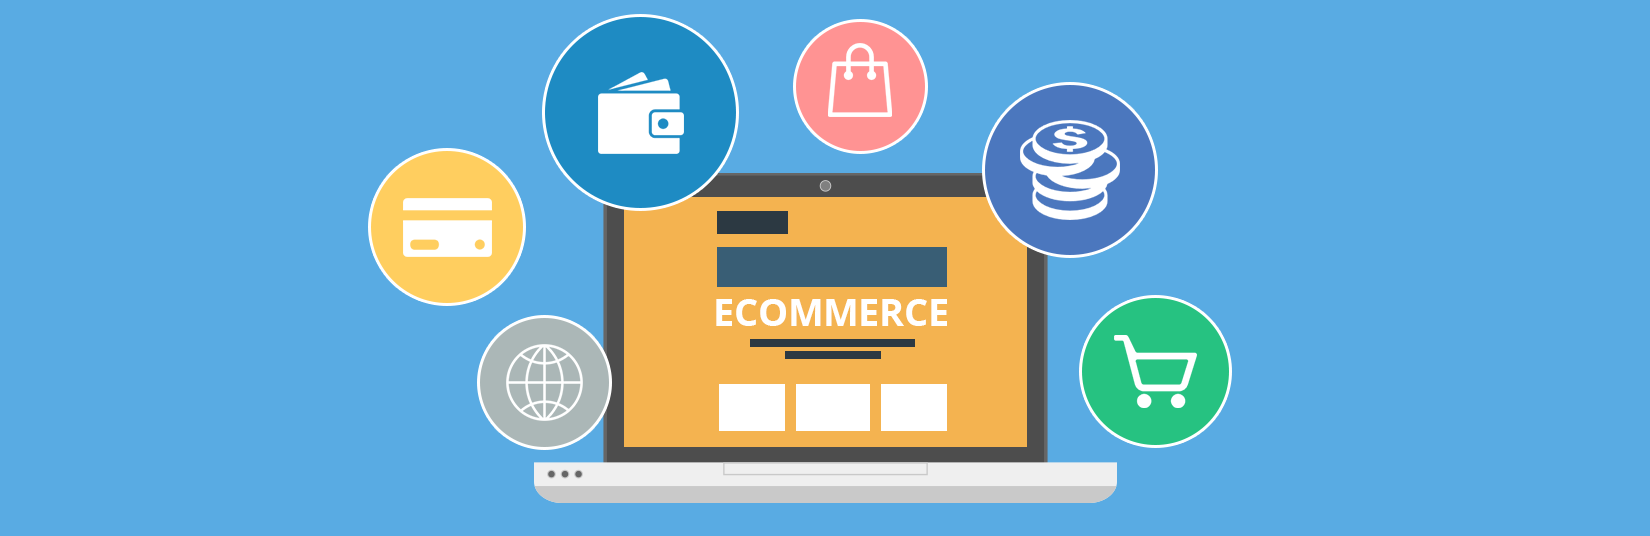 ecommerce-website-development-services-texas